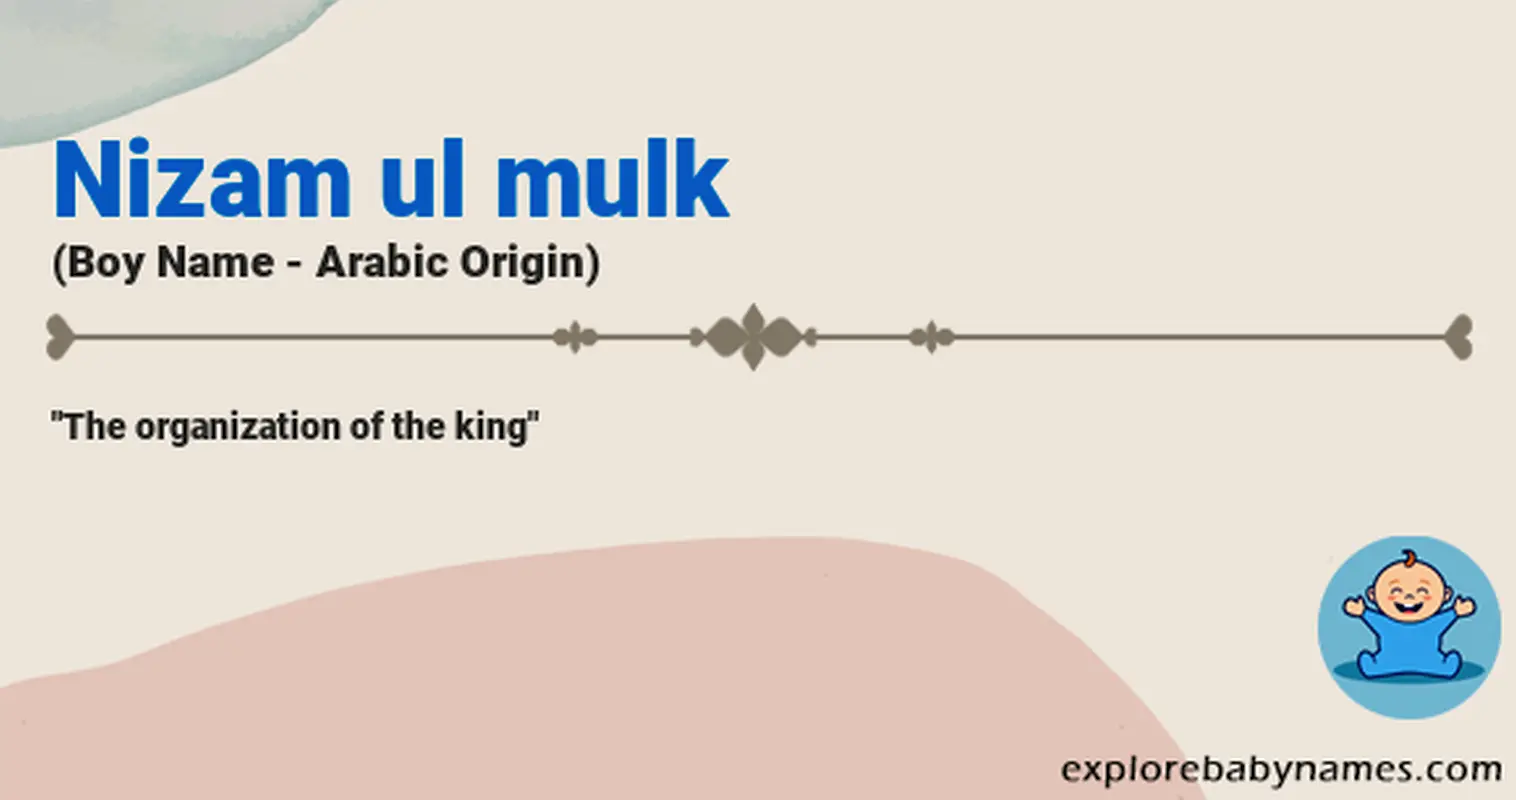 Meaning of Nizam ul mulk